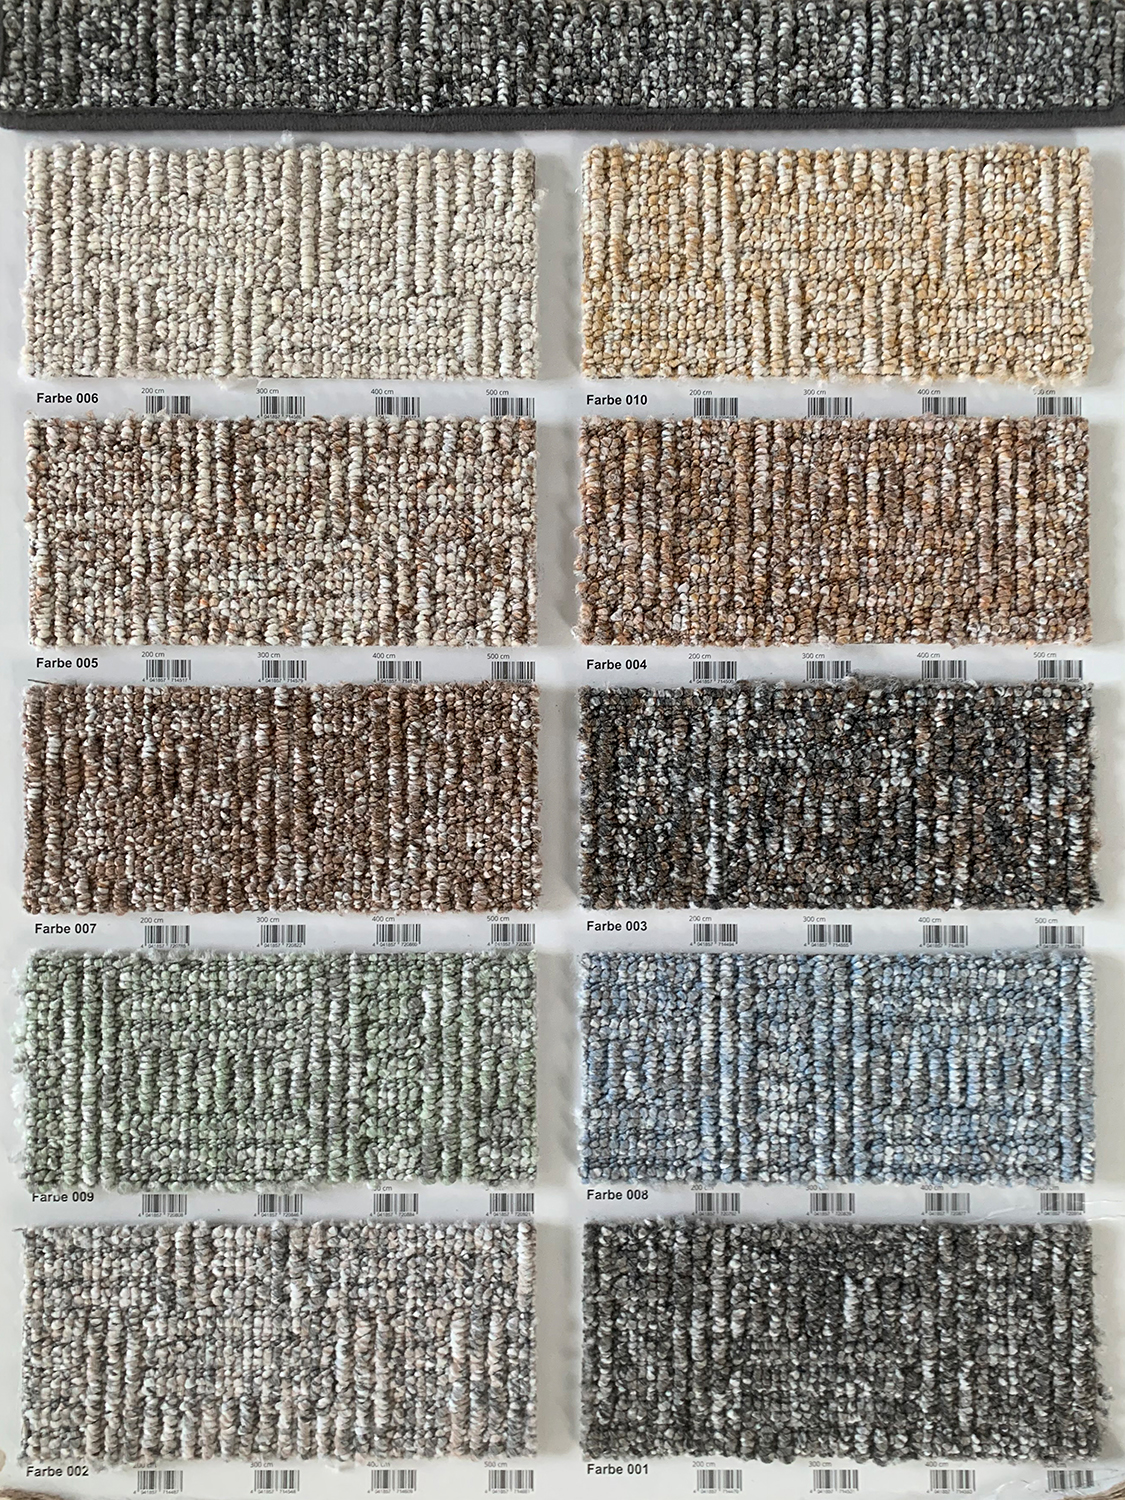 Wandsbeker Teppichkettelei